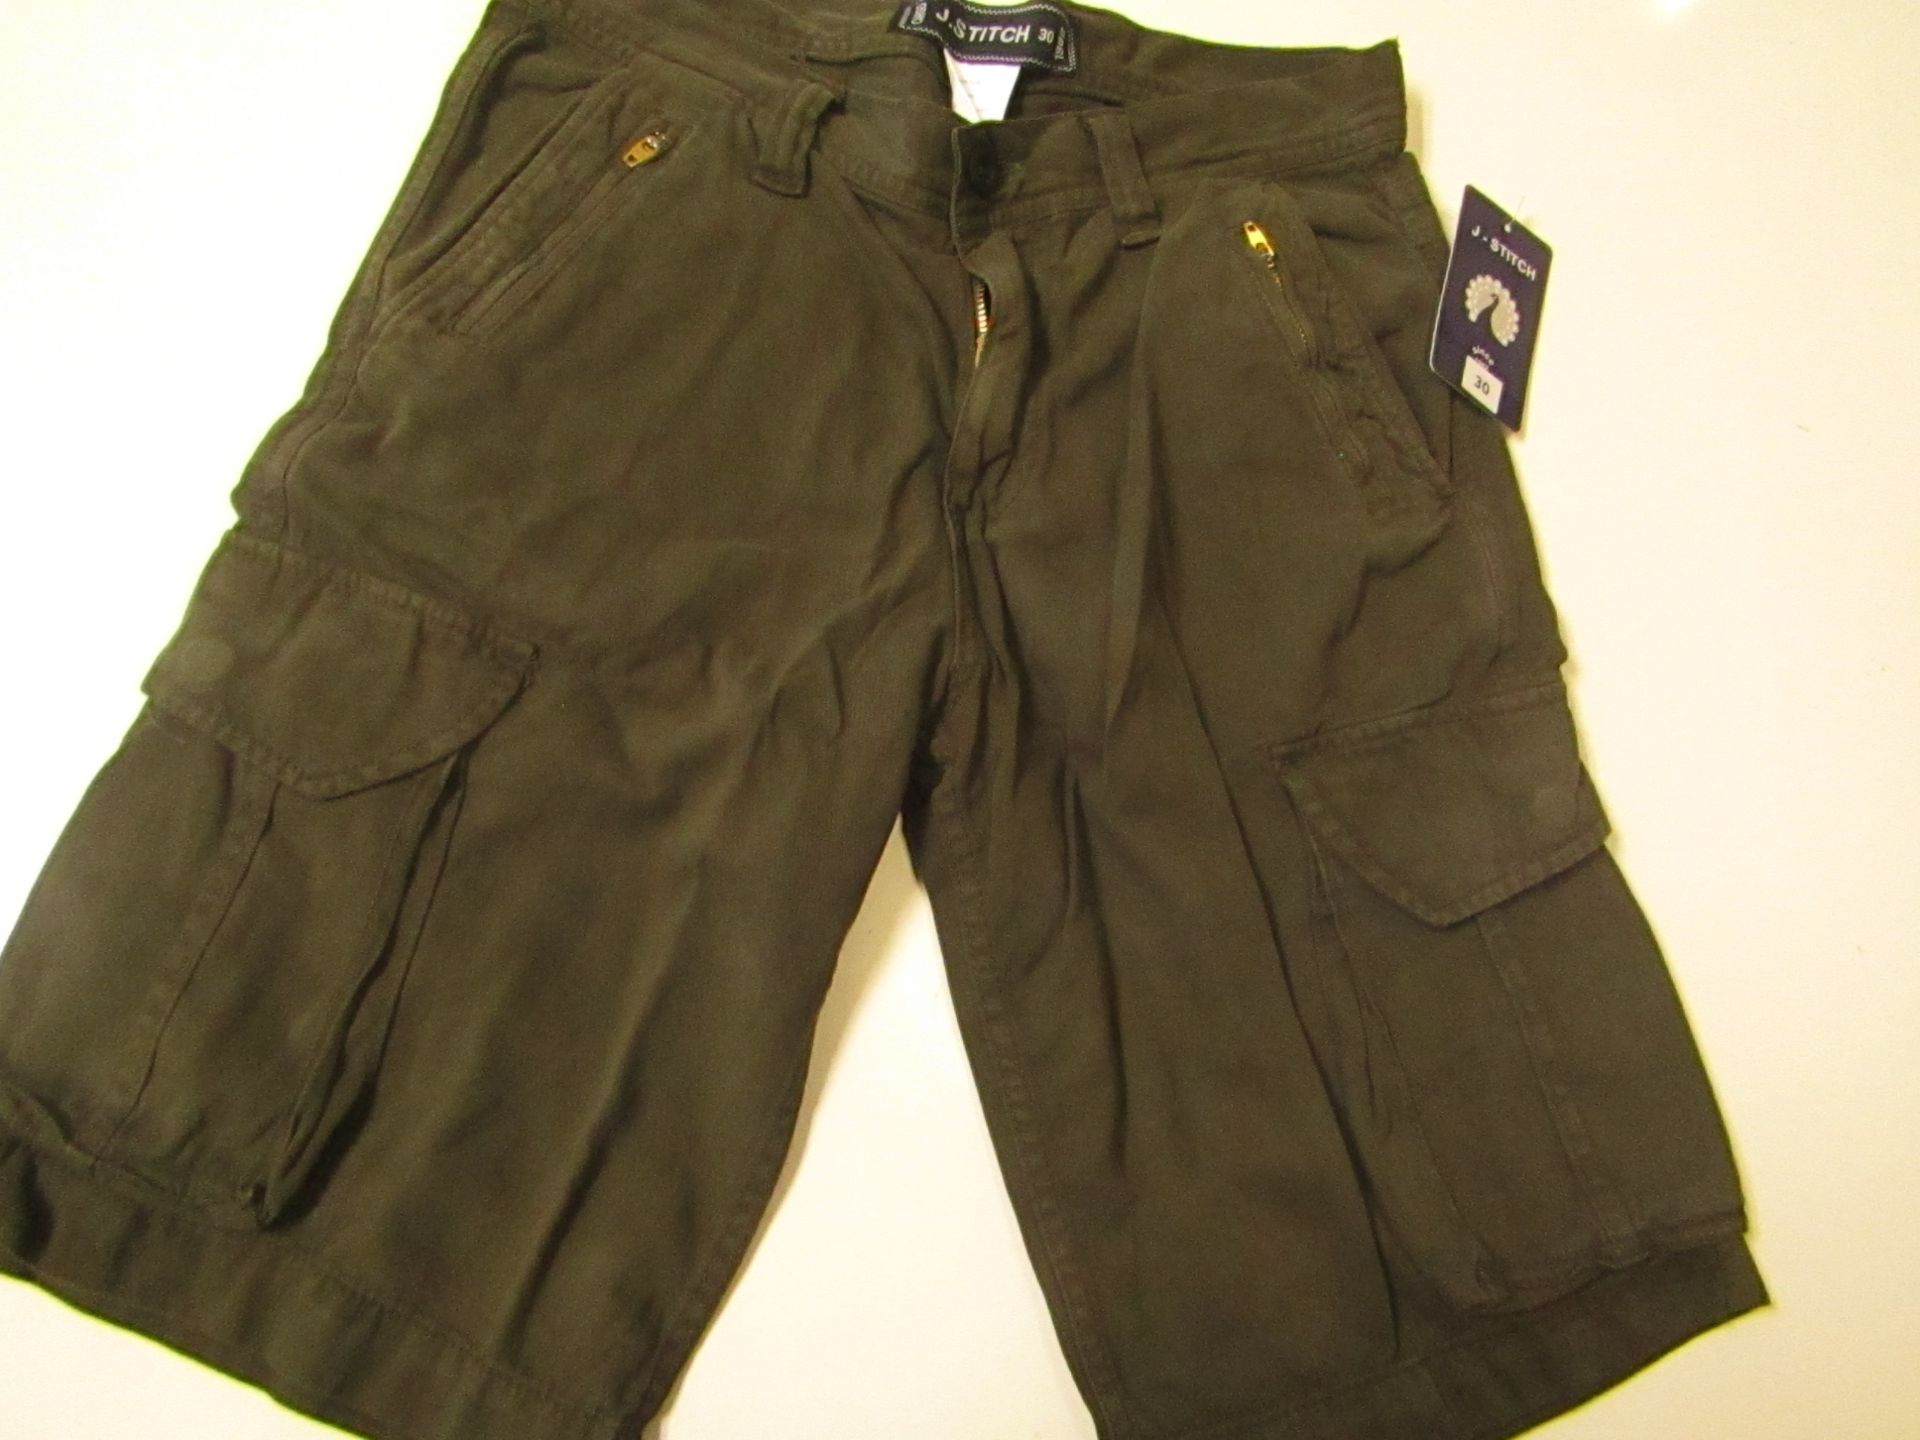 J.Stitch Shorts Dark Green W 30 new & Packaged